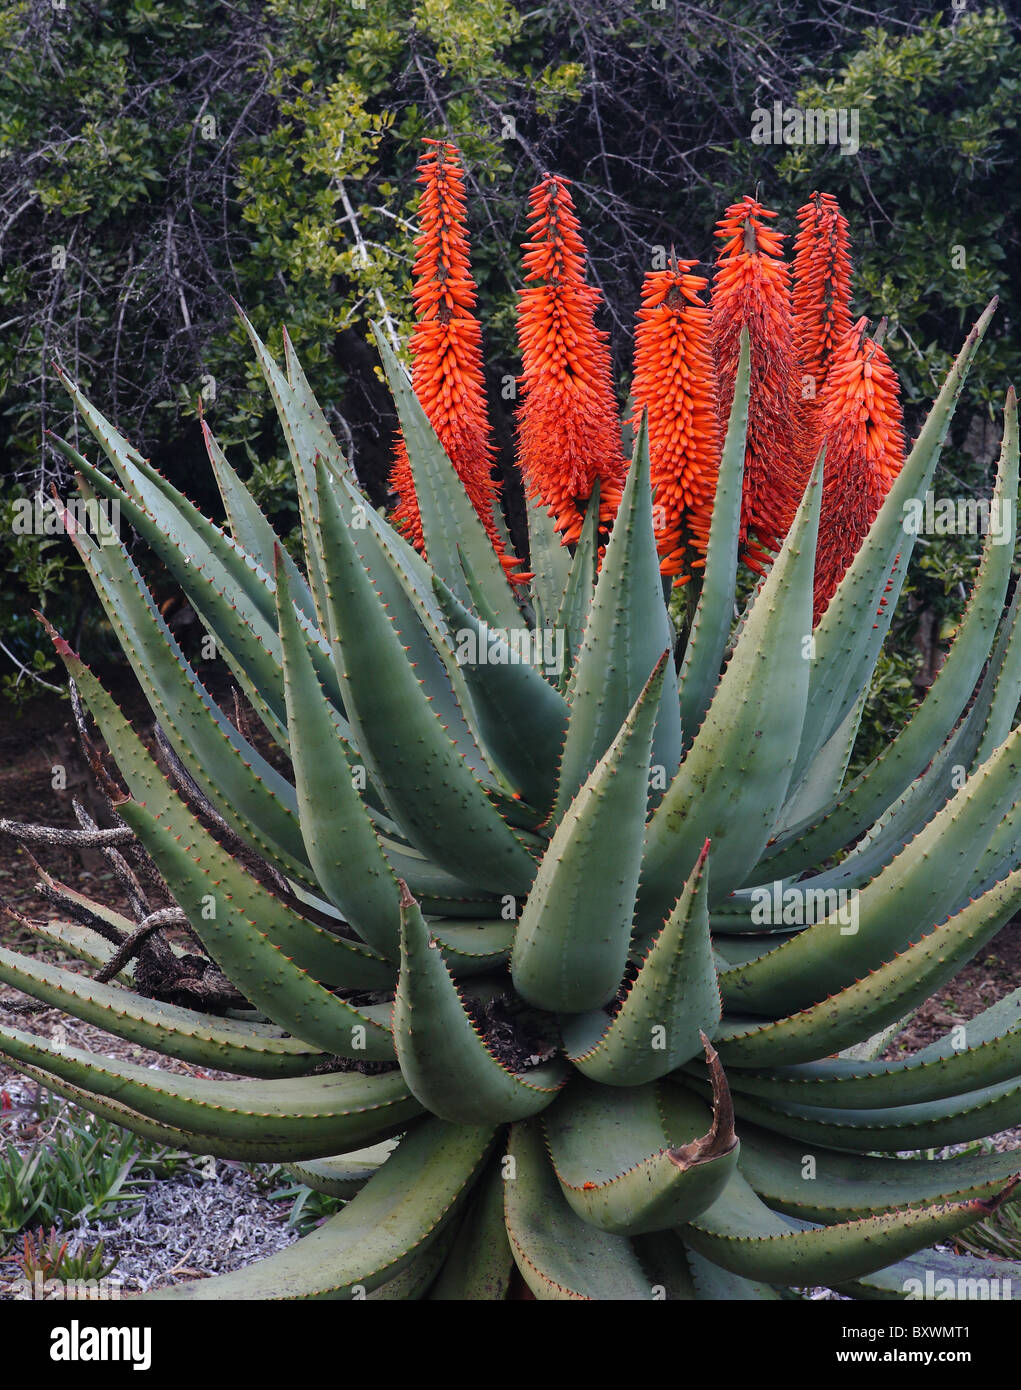 Aloe succotrina - Orange flowers on Aloe Vera in Southern California Stock Photo